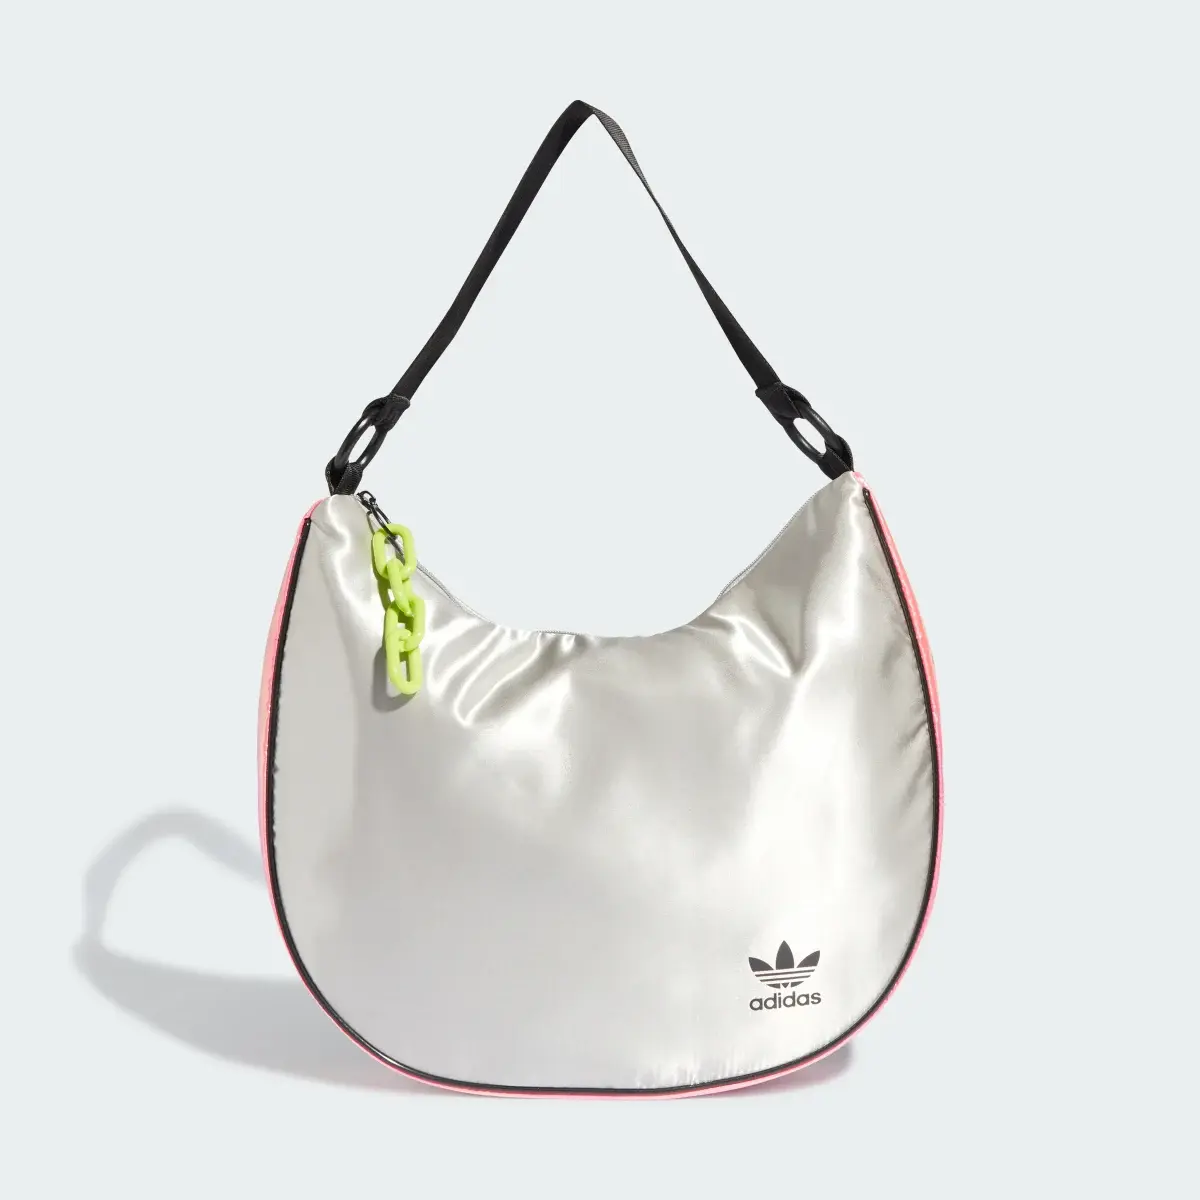 Adidas Metamoto Shoulder Bag. 2